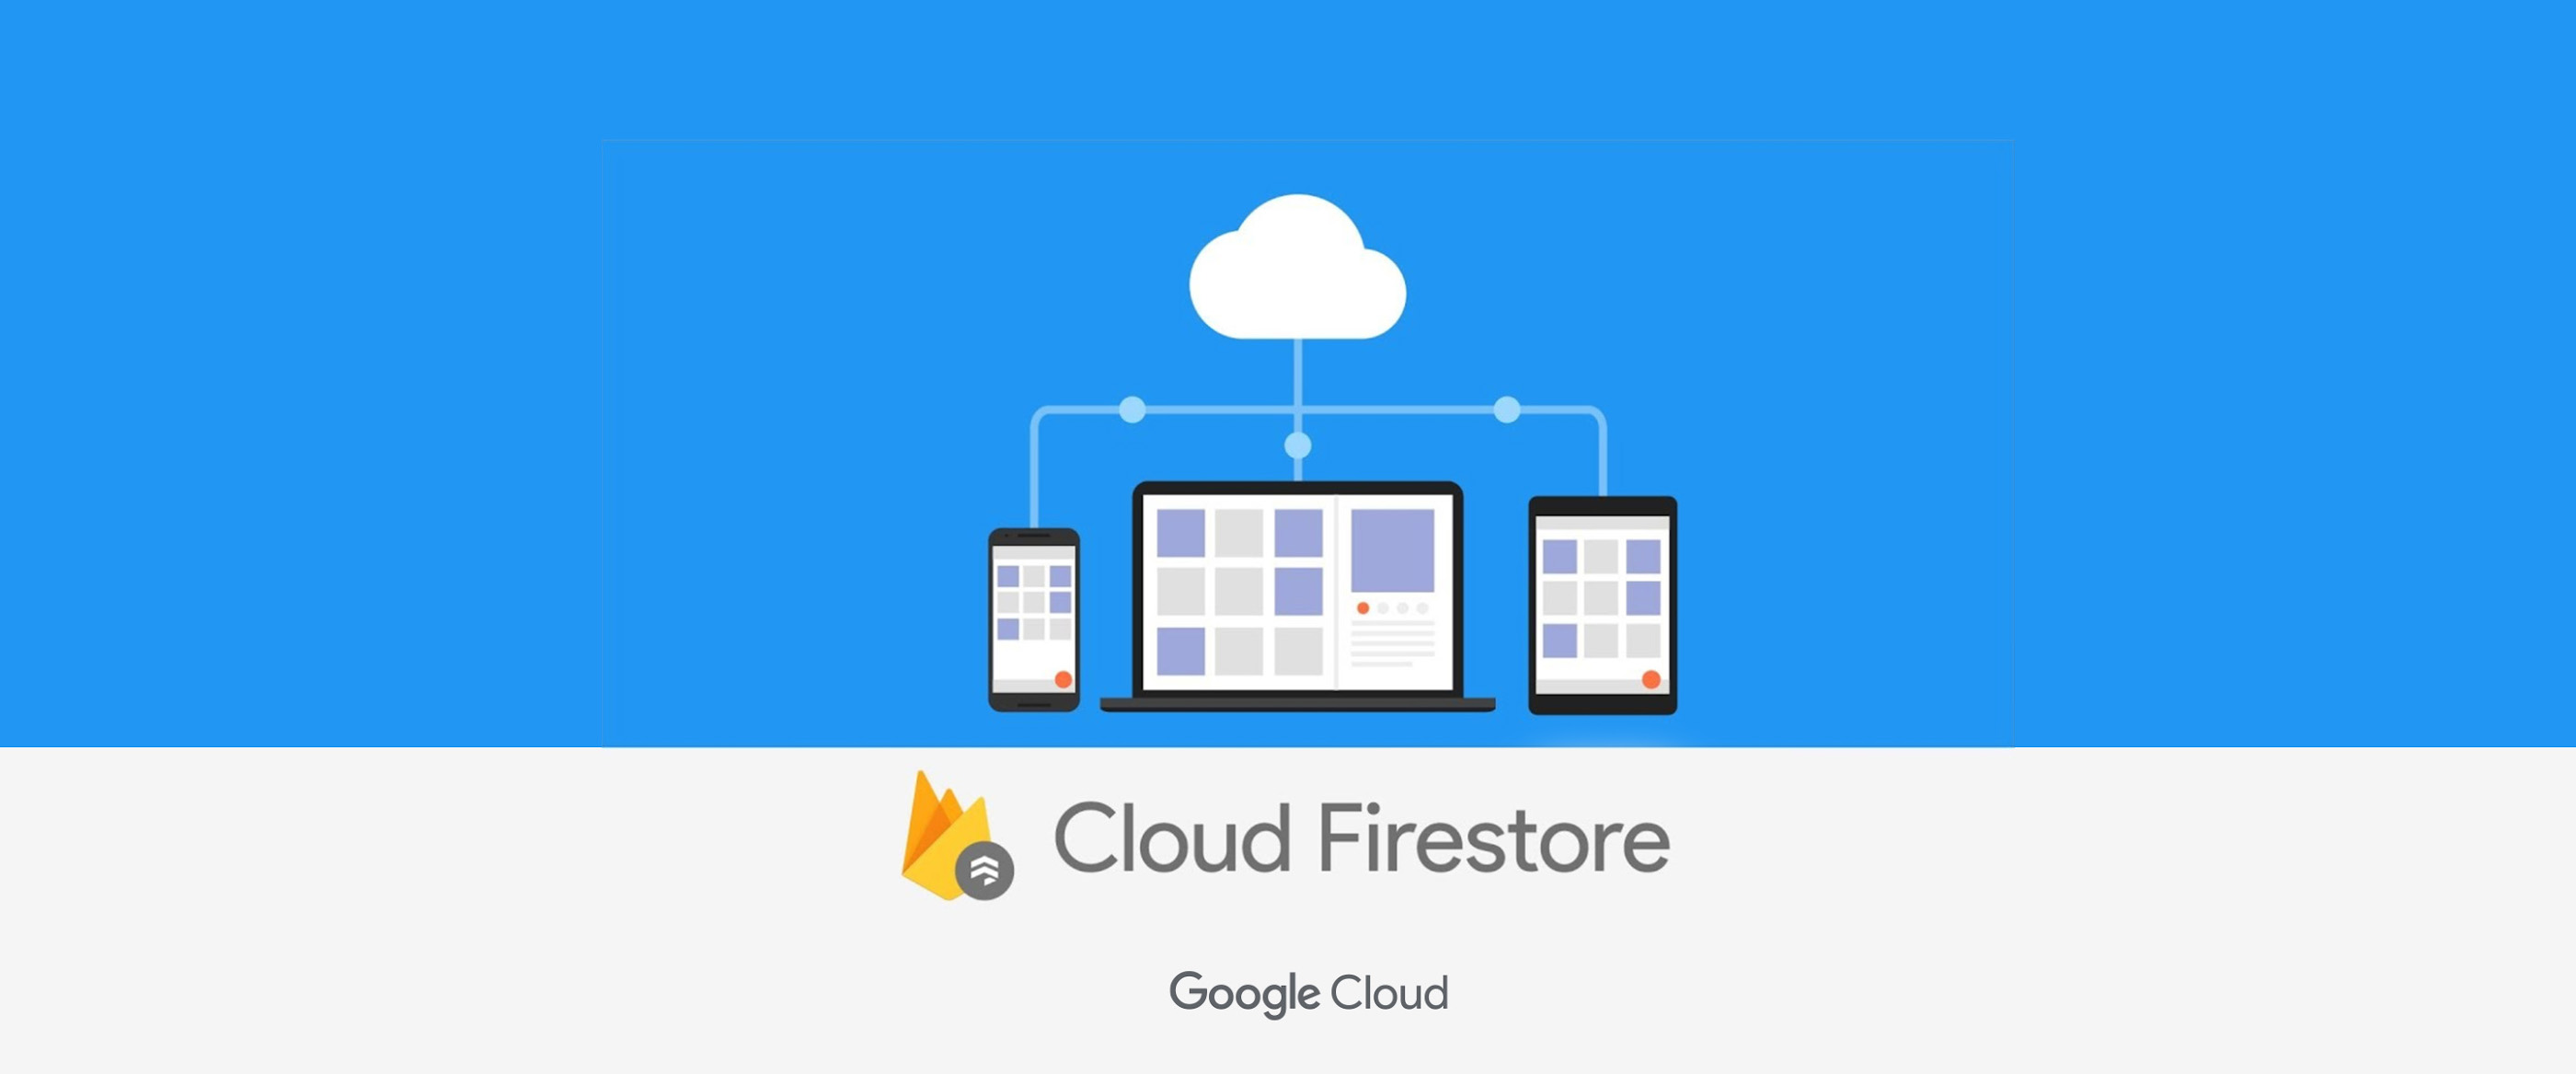 https://storage.googleapis.com/gweb-cloudblog-publish/original_images/cloud_firestore.jpg